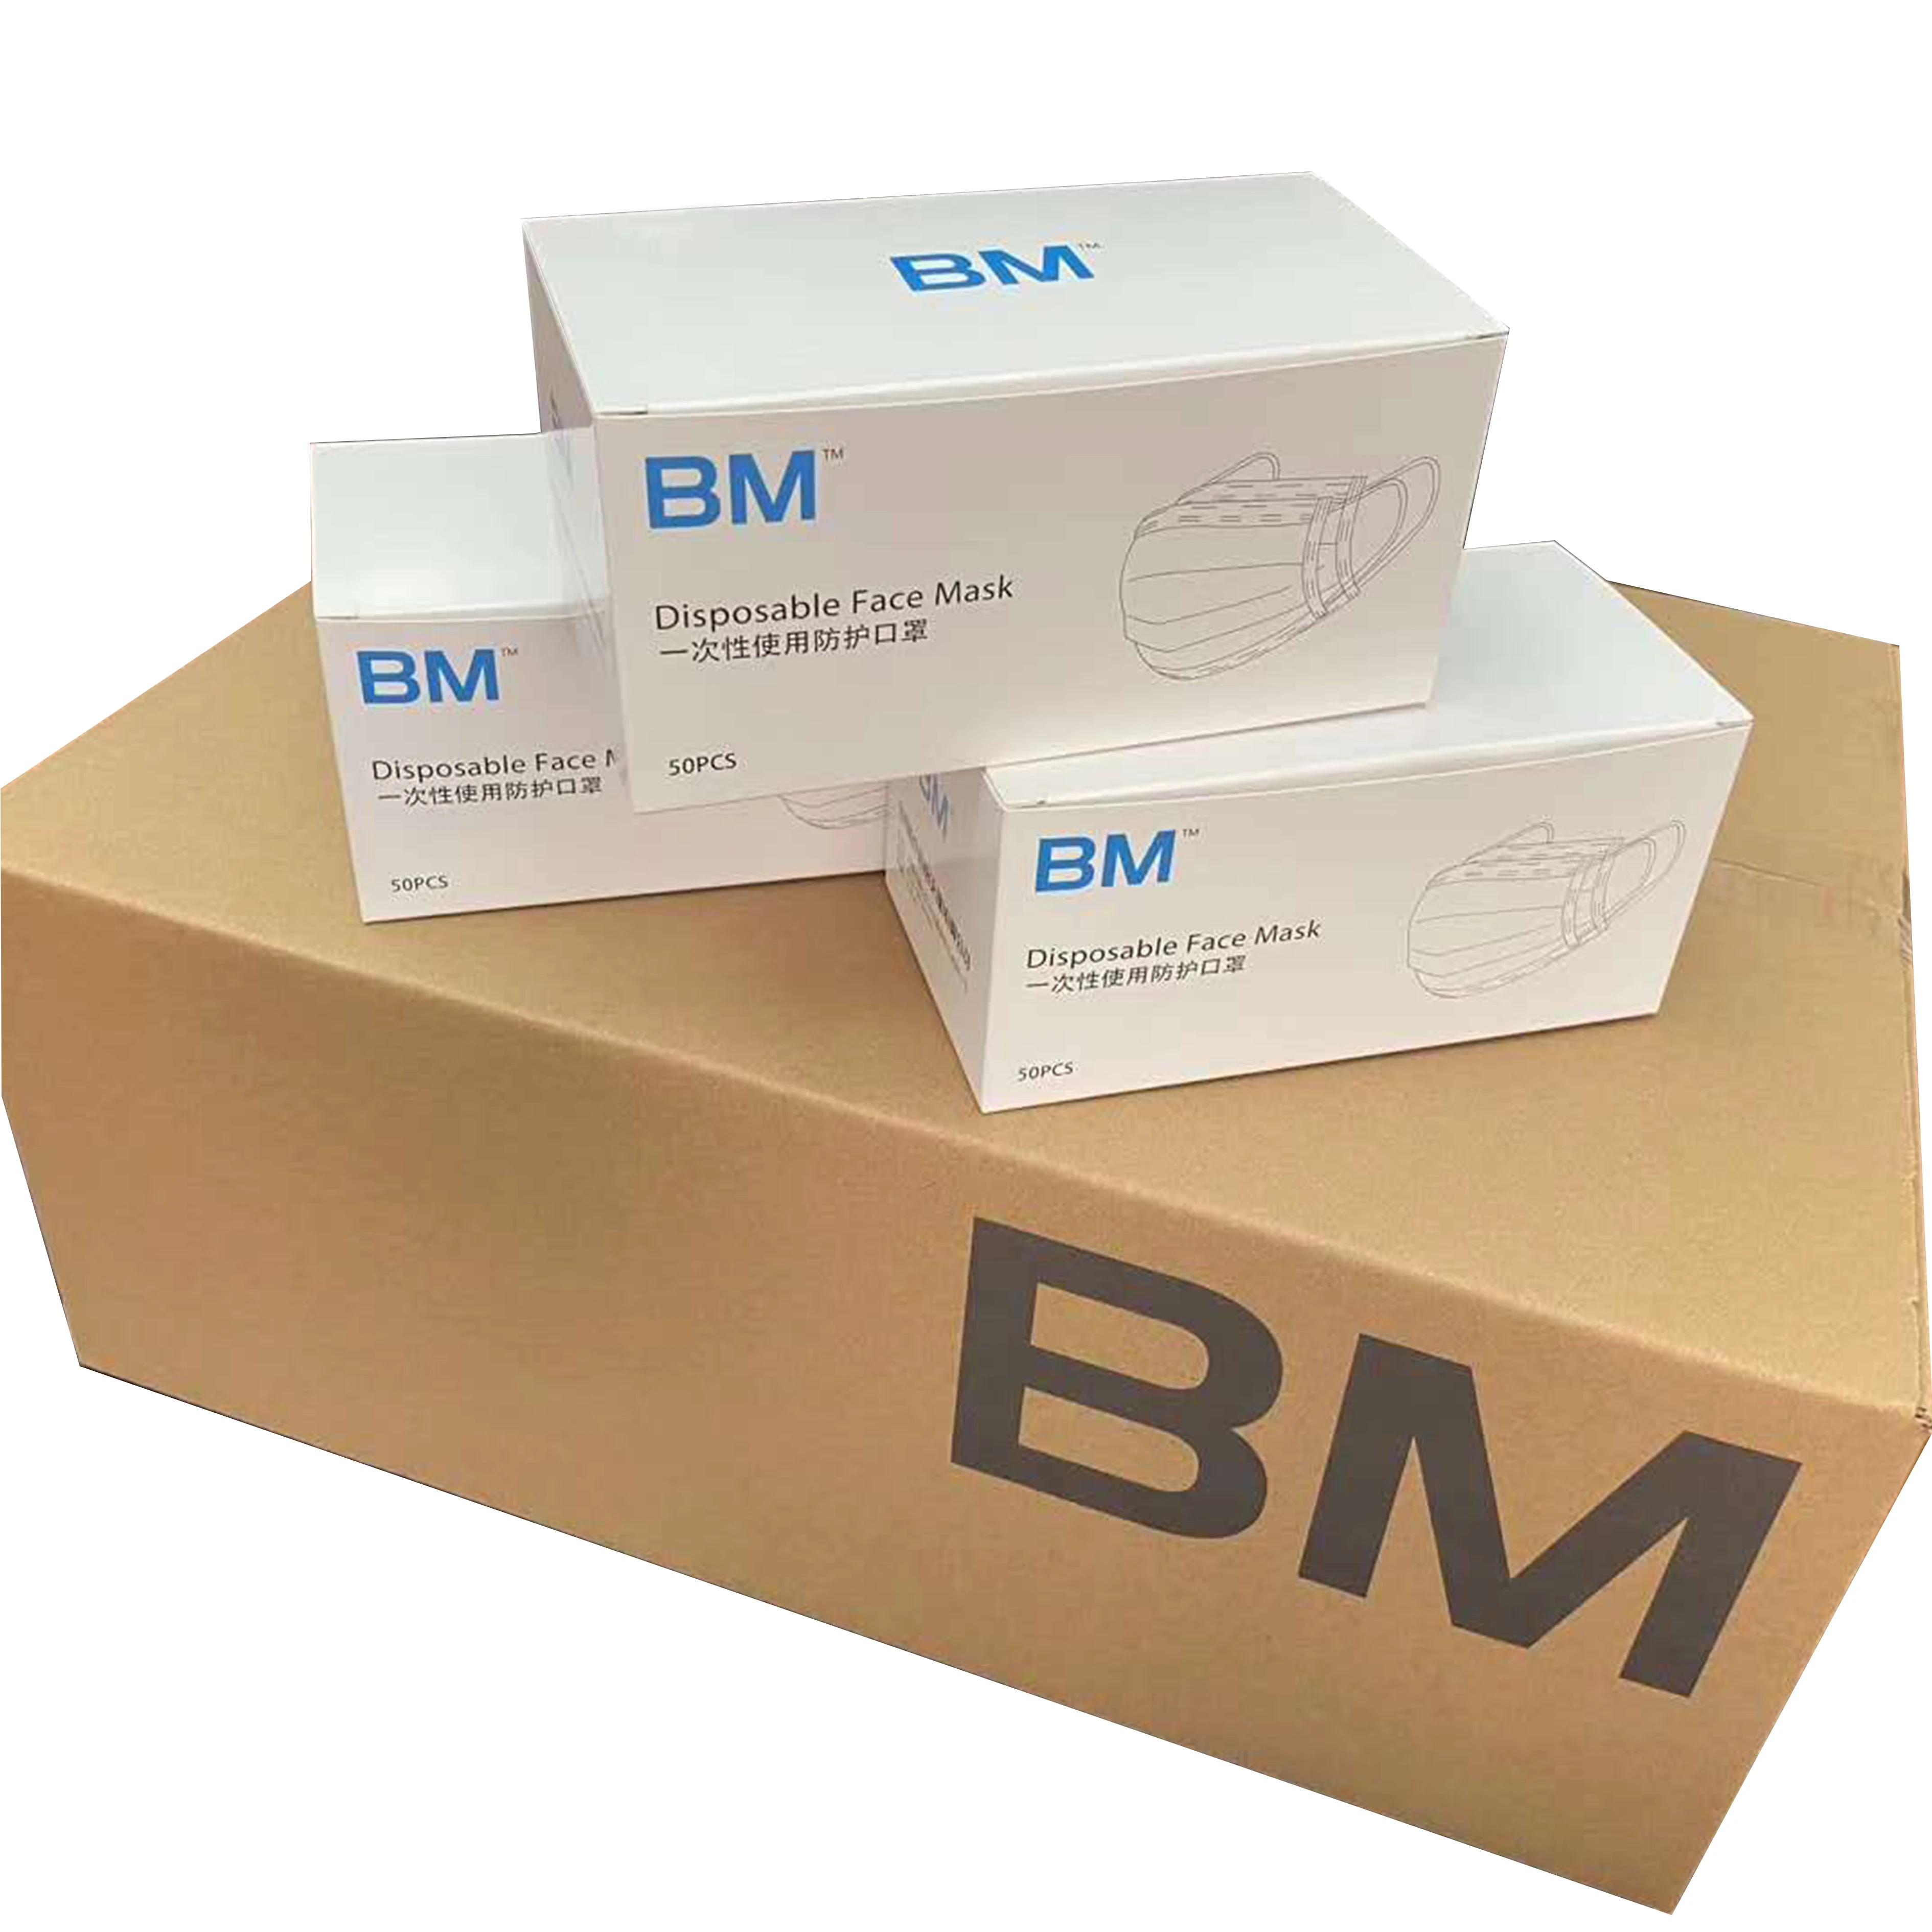 
BM single use medical prevent pneumonia virus bacteria  (62519808670)